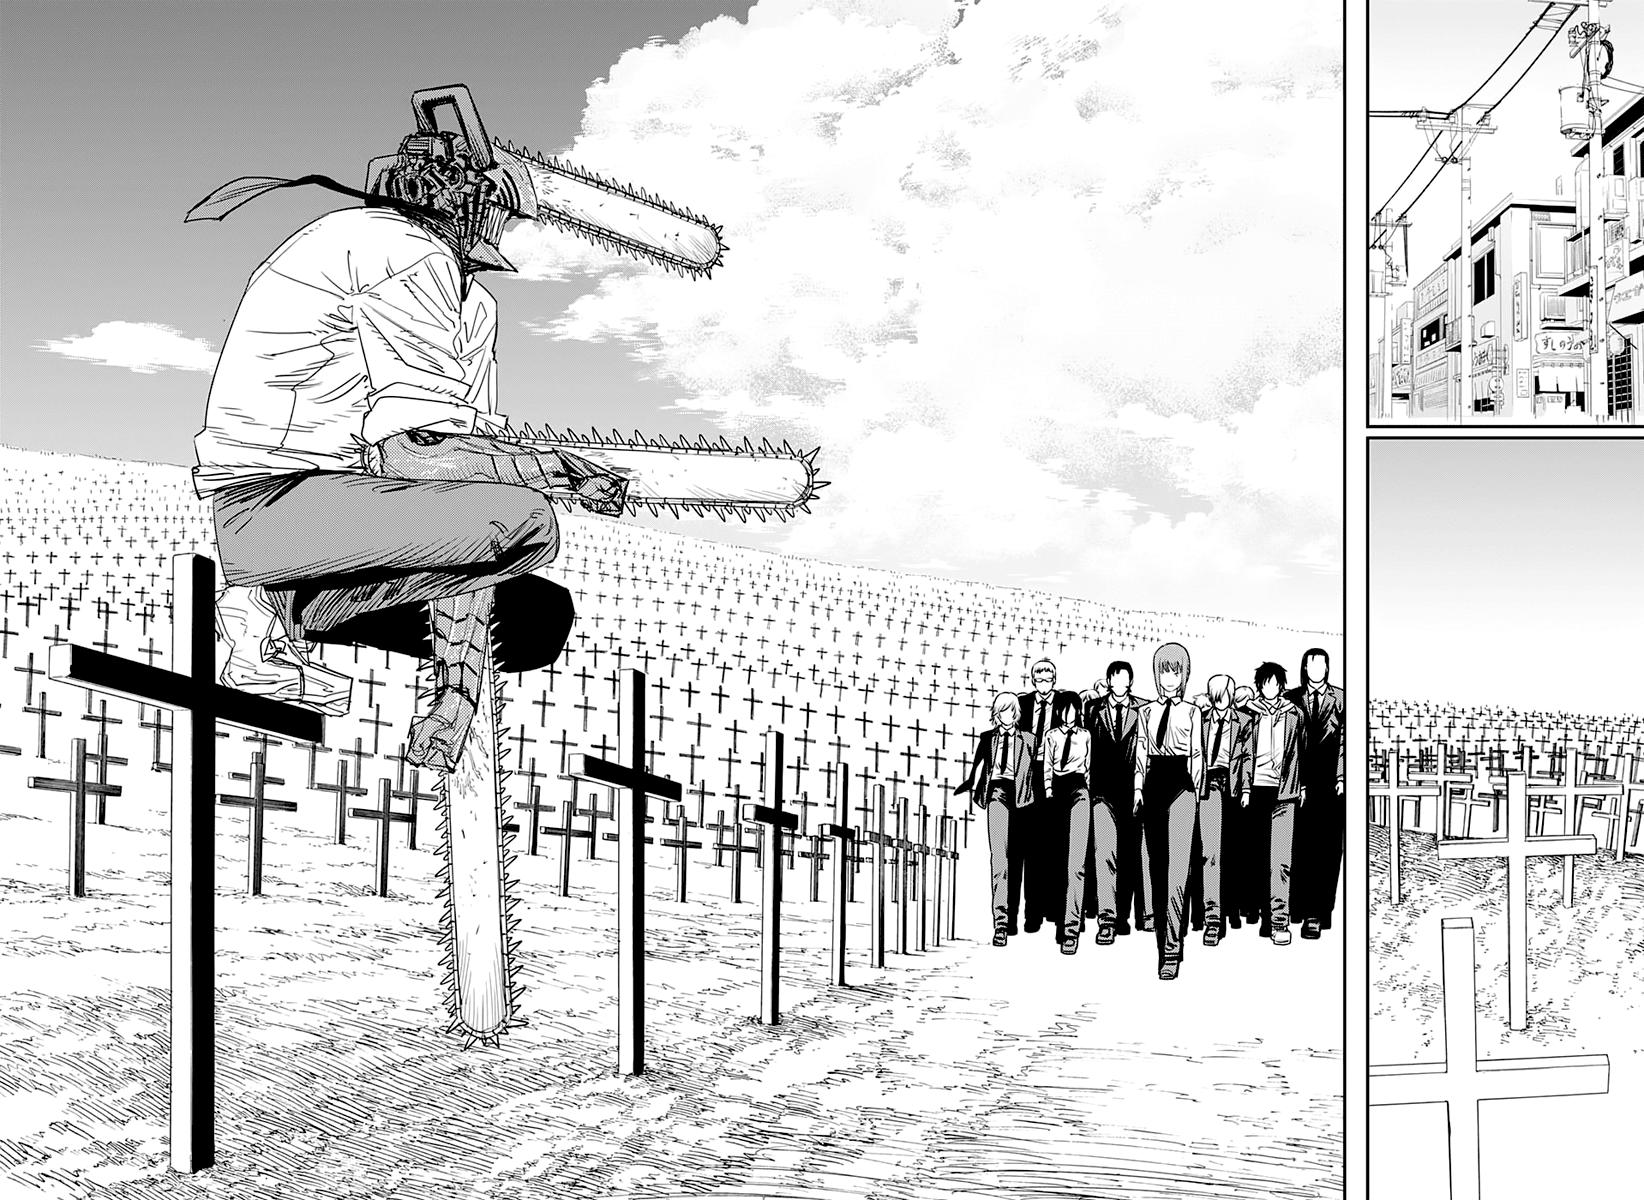 Chainsaw Man Manga, Chapter 93 - Chainsawman